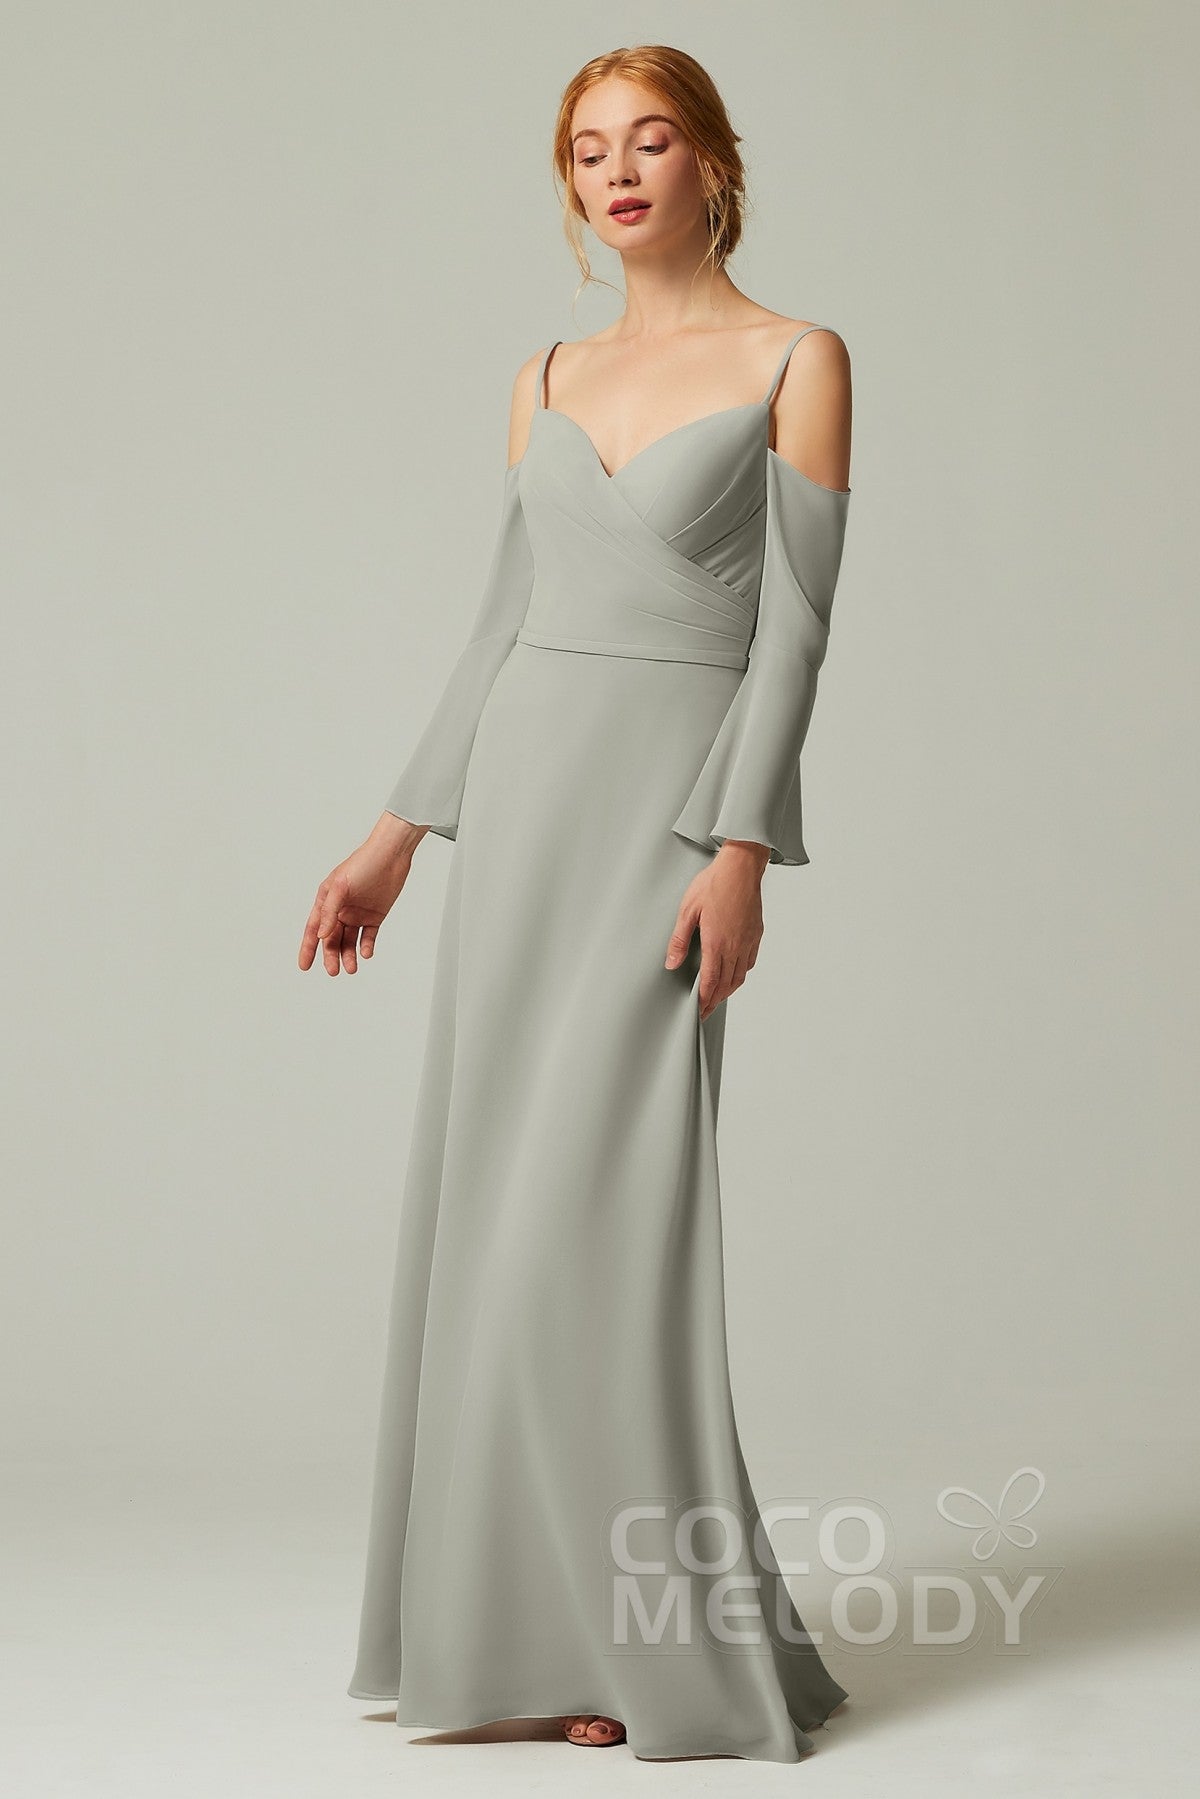 A-Line Floor Length Chiffon Bridesmaid Dress